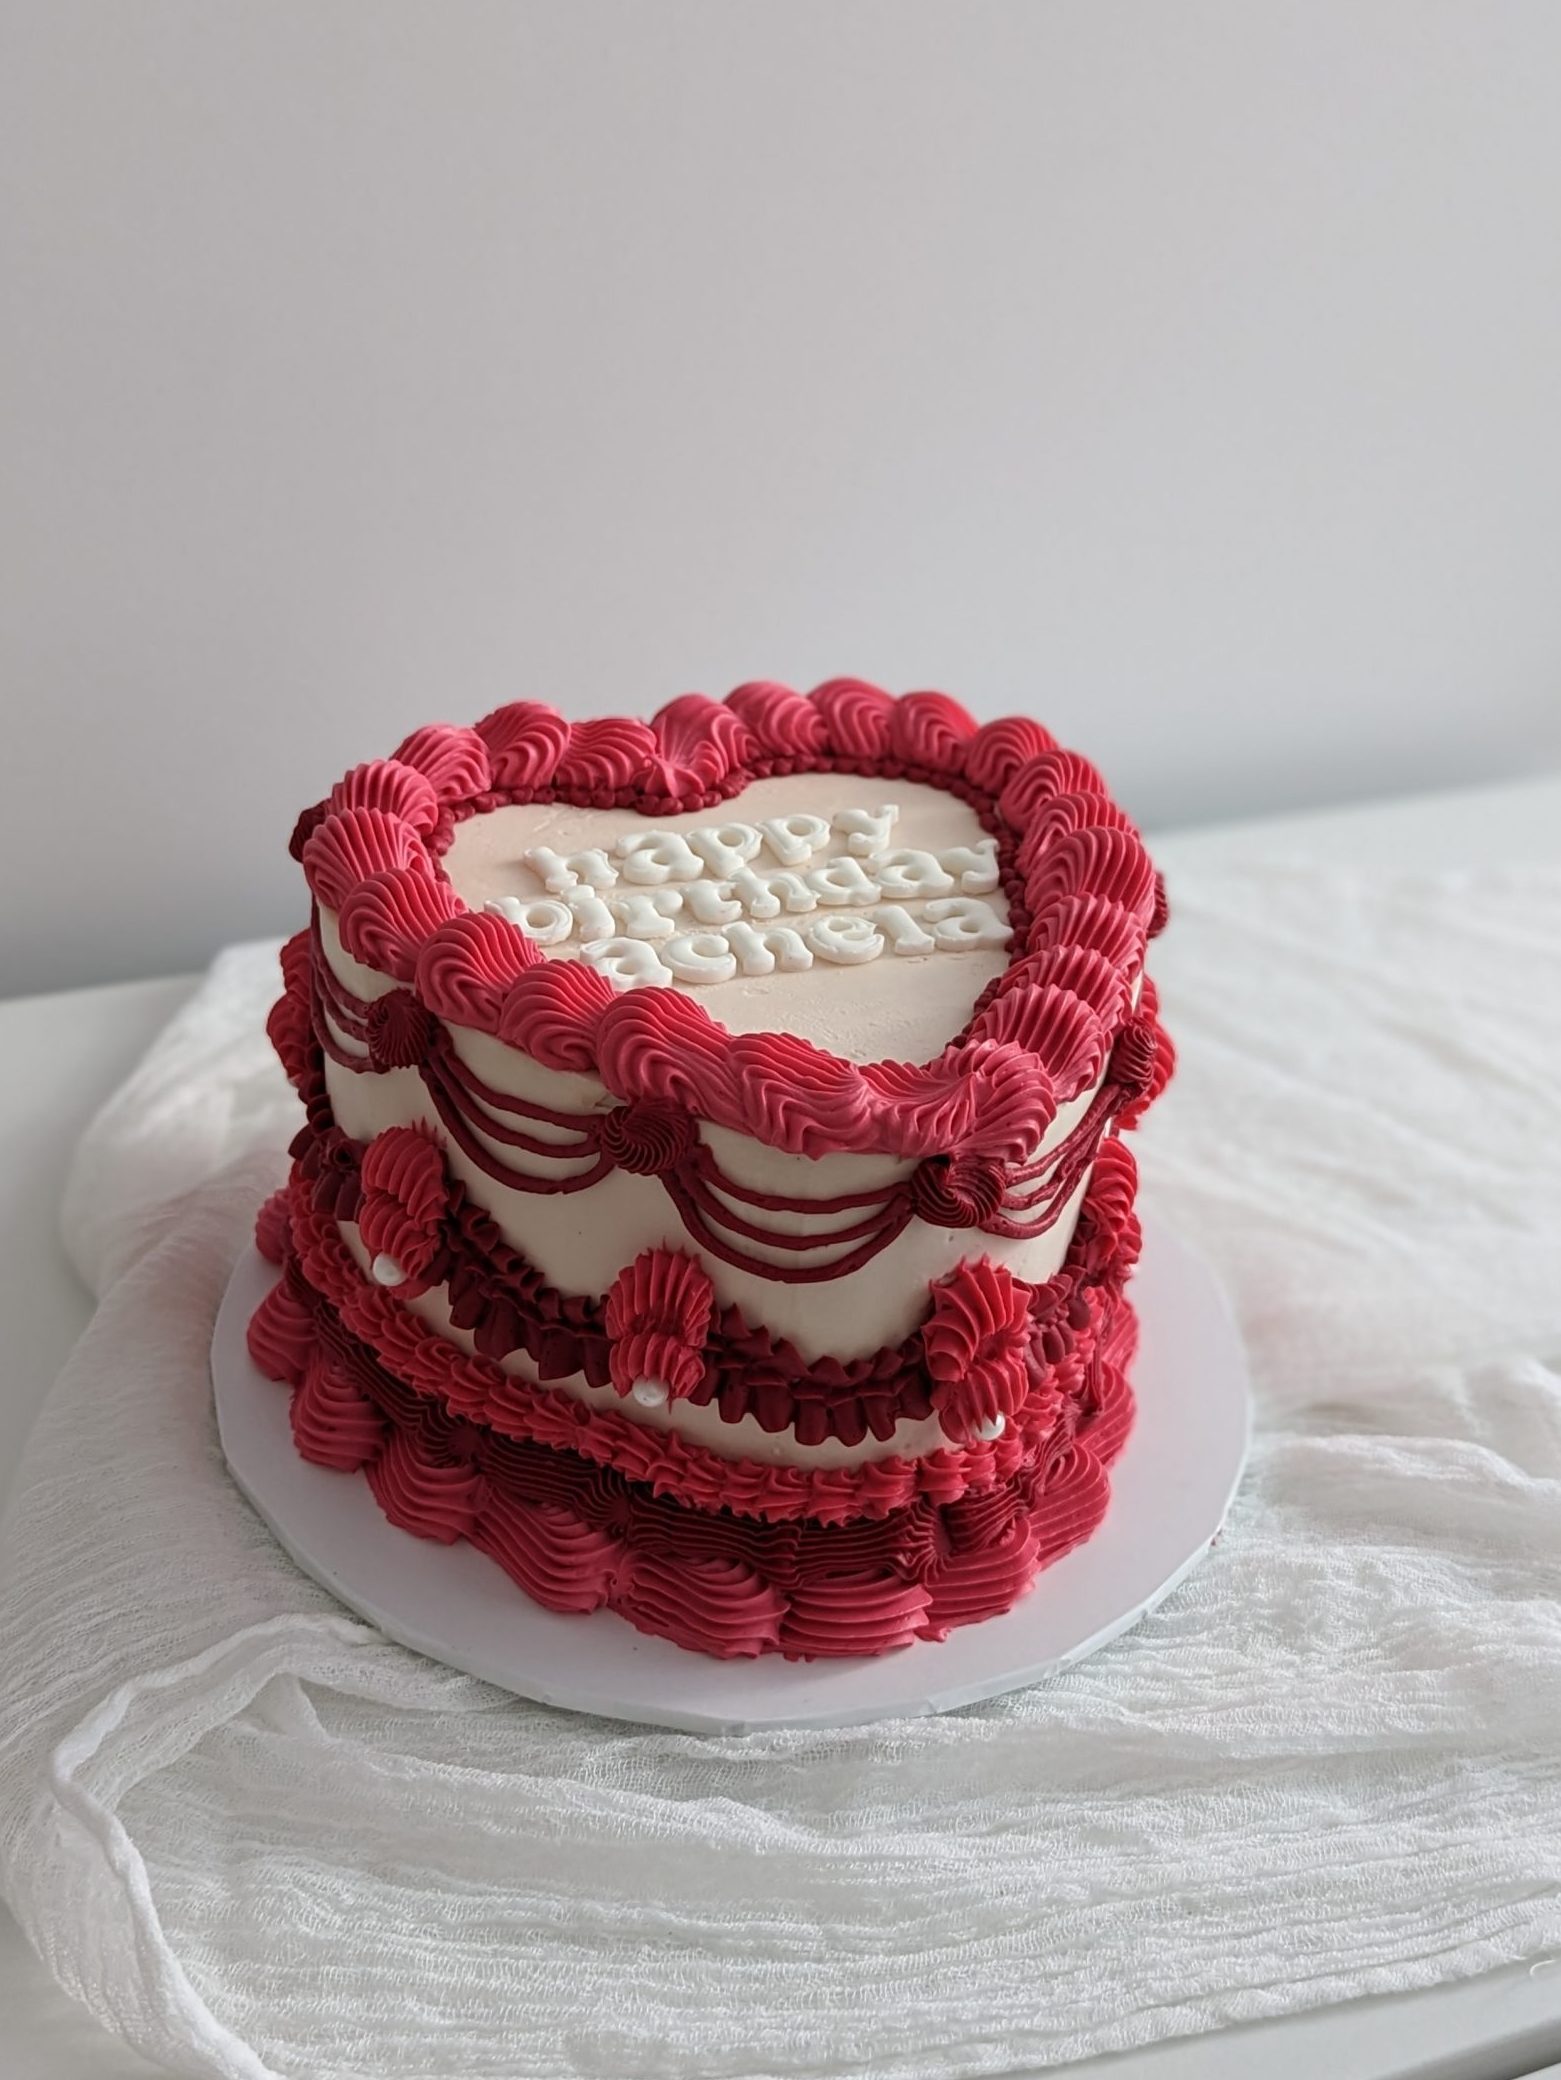 Retro Heart Cake